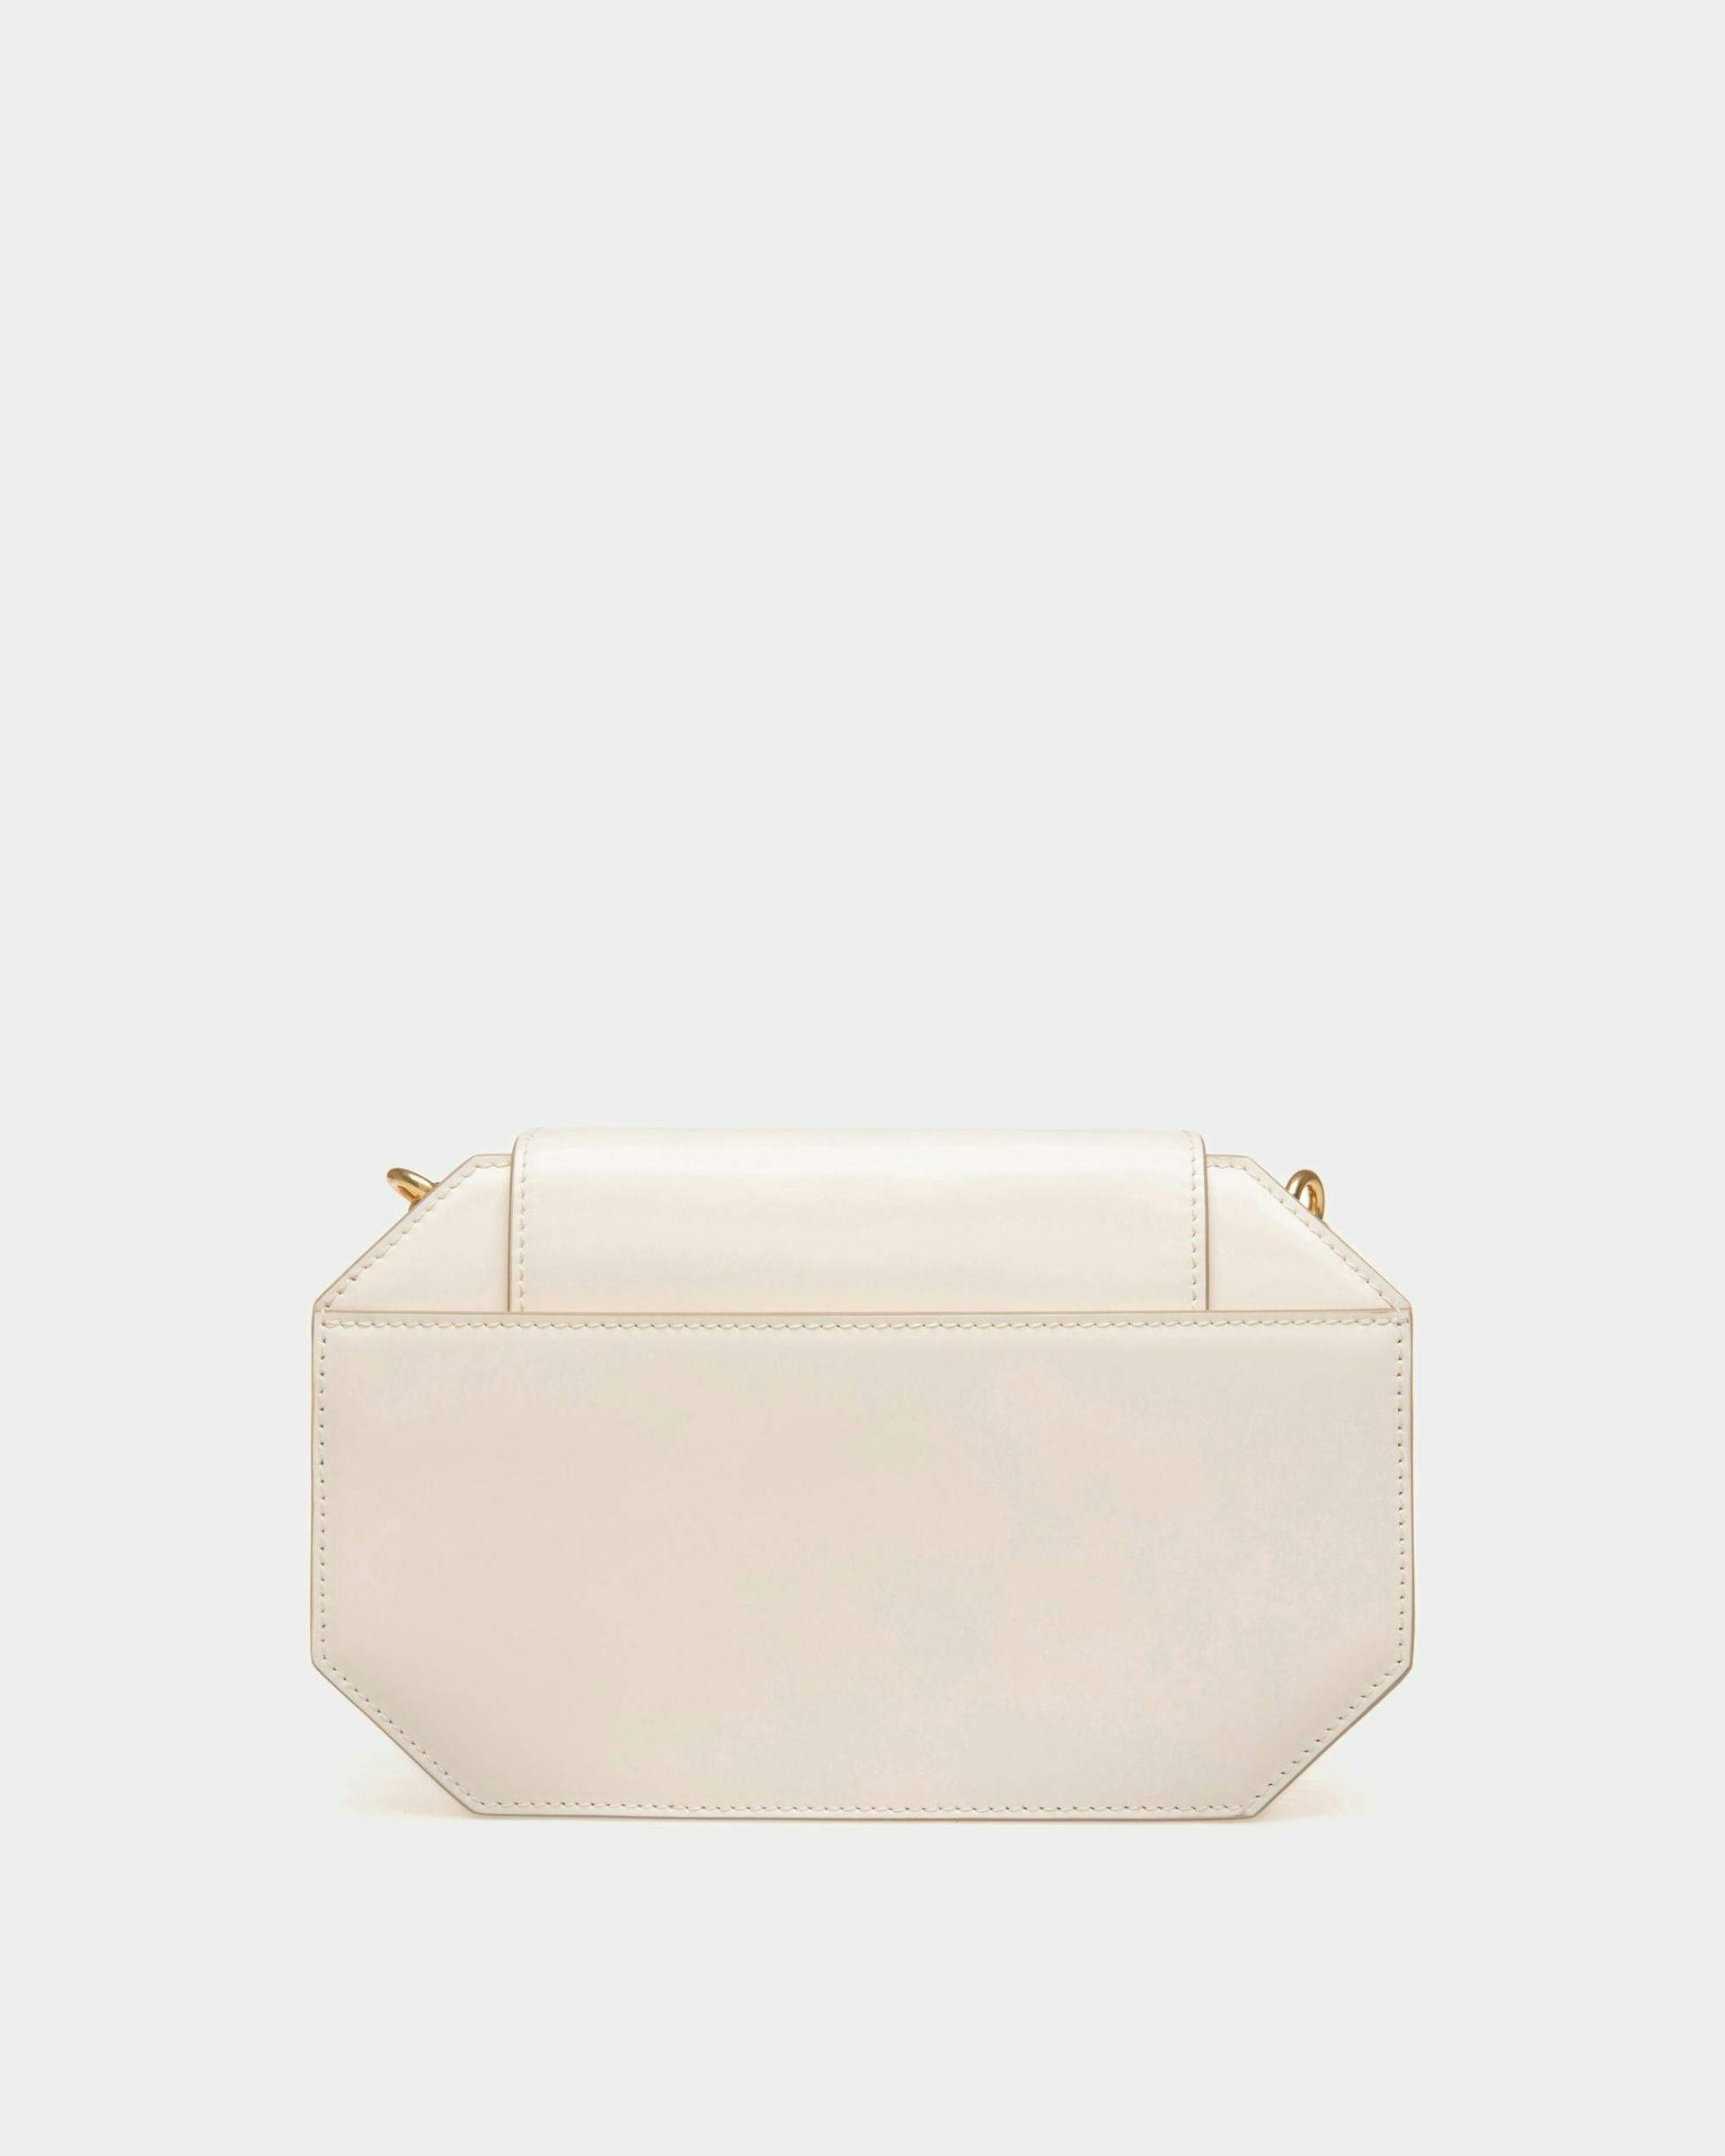 Women's Emblem Mini Bag in White Patent Leather | Bally | Still Life Back